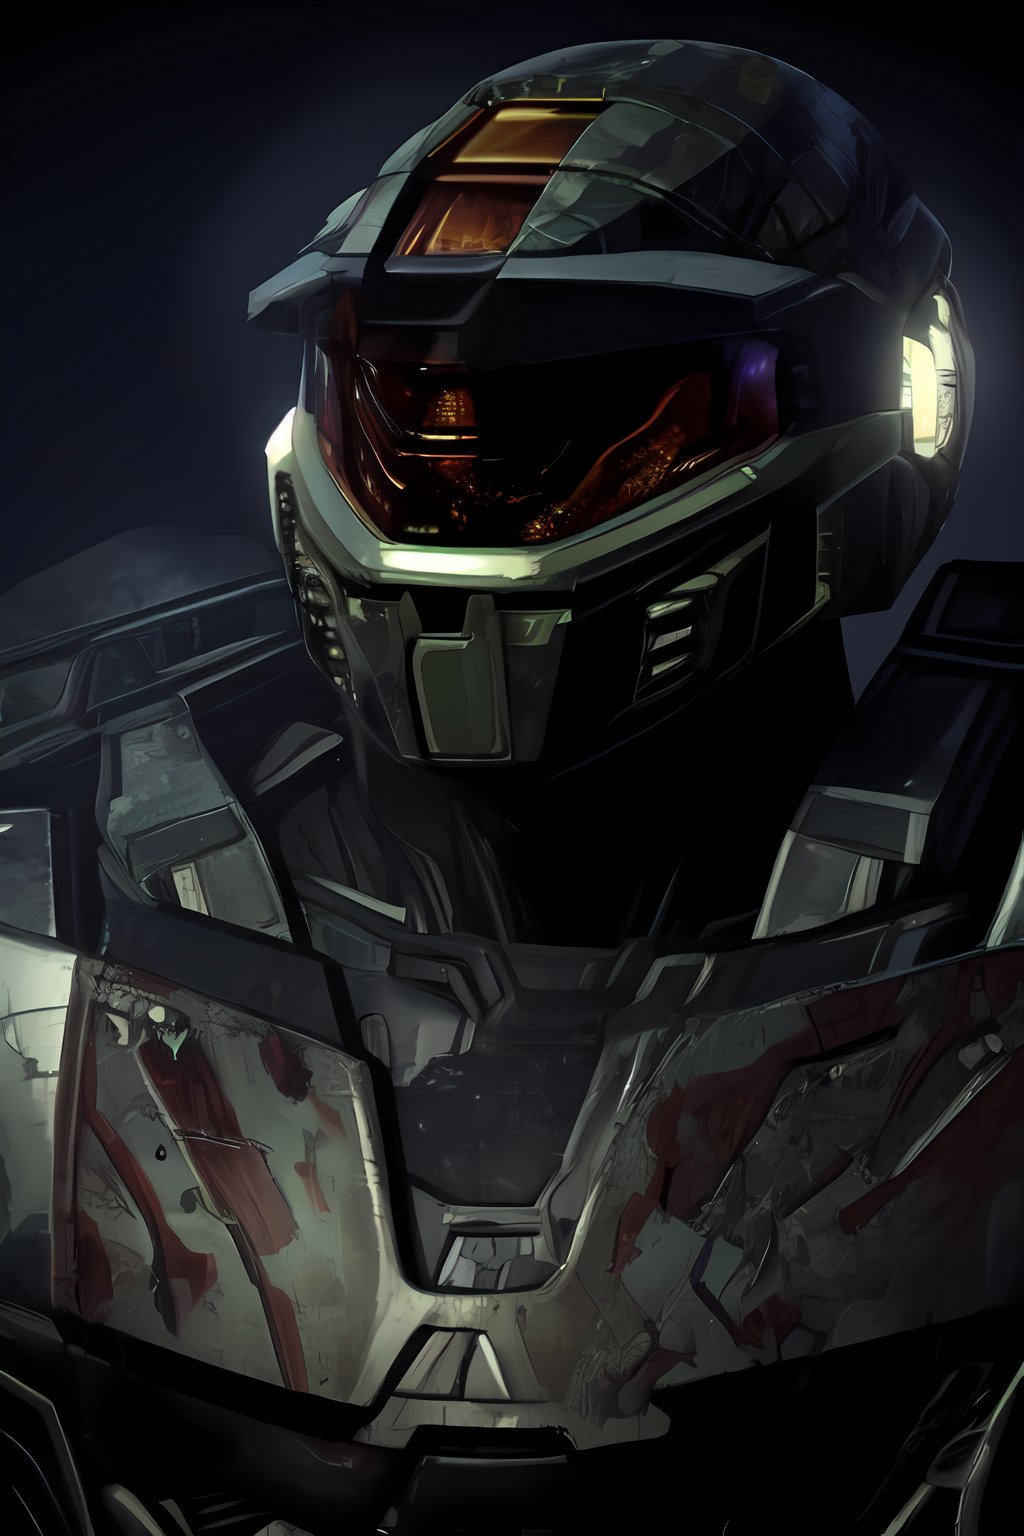 black Halo armor, arcadia armor, halo helmet, gold visor, close up of the head, visor reflection of a galaxy, ultra realistic lights, ultrarealistic shadows,<lora:659111690174031528:1.0>